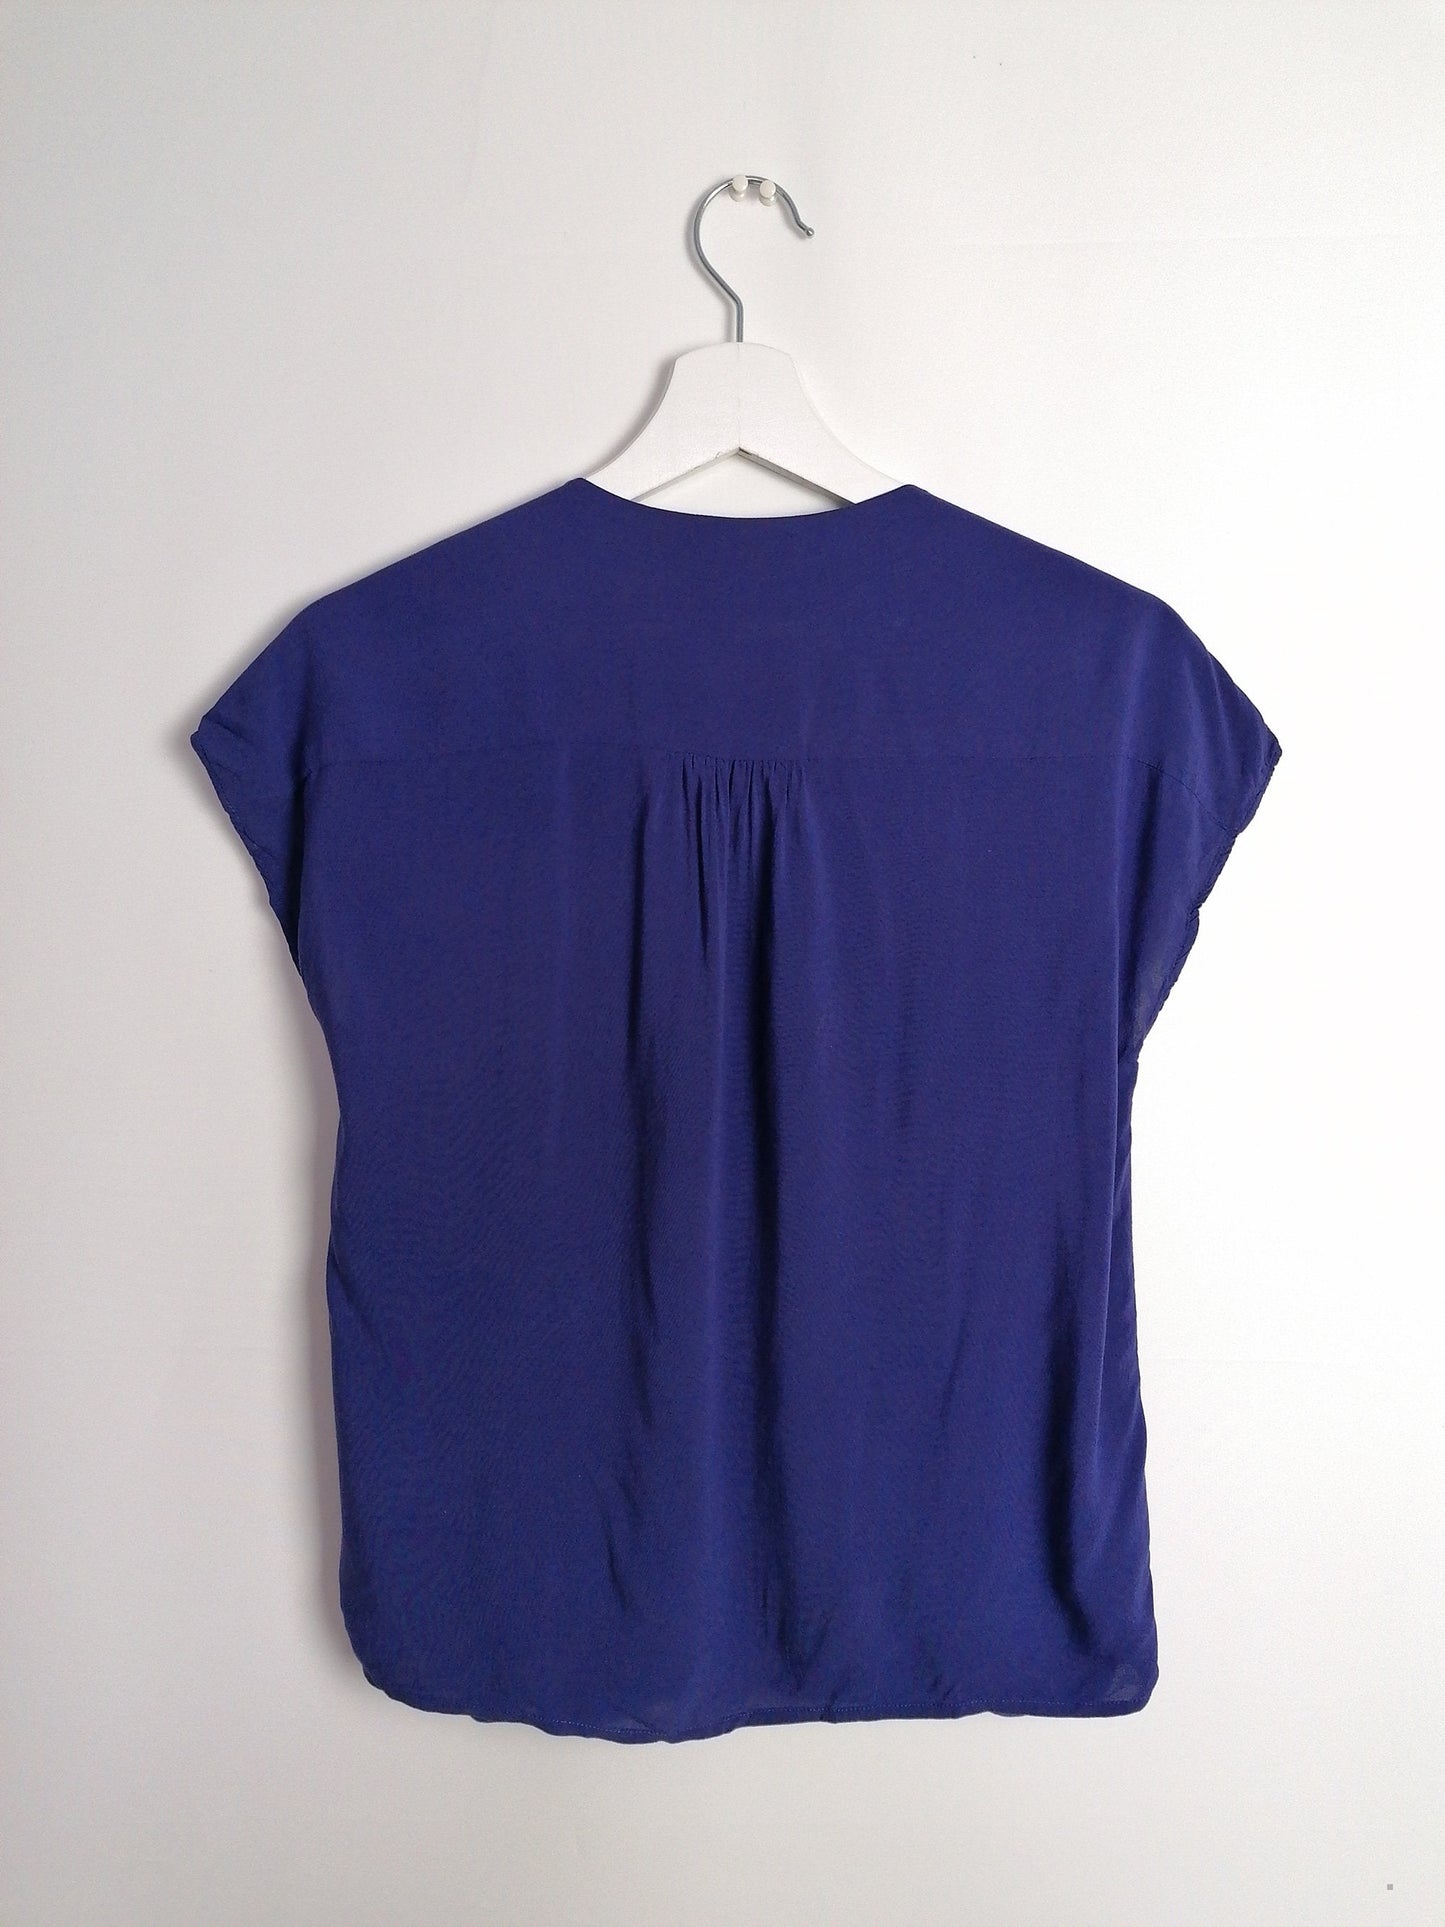 AHLENS blue viscose top wrap blouse | Size XS-S